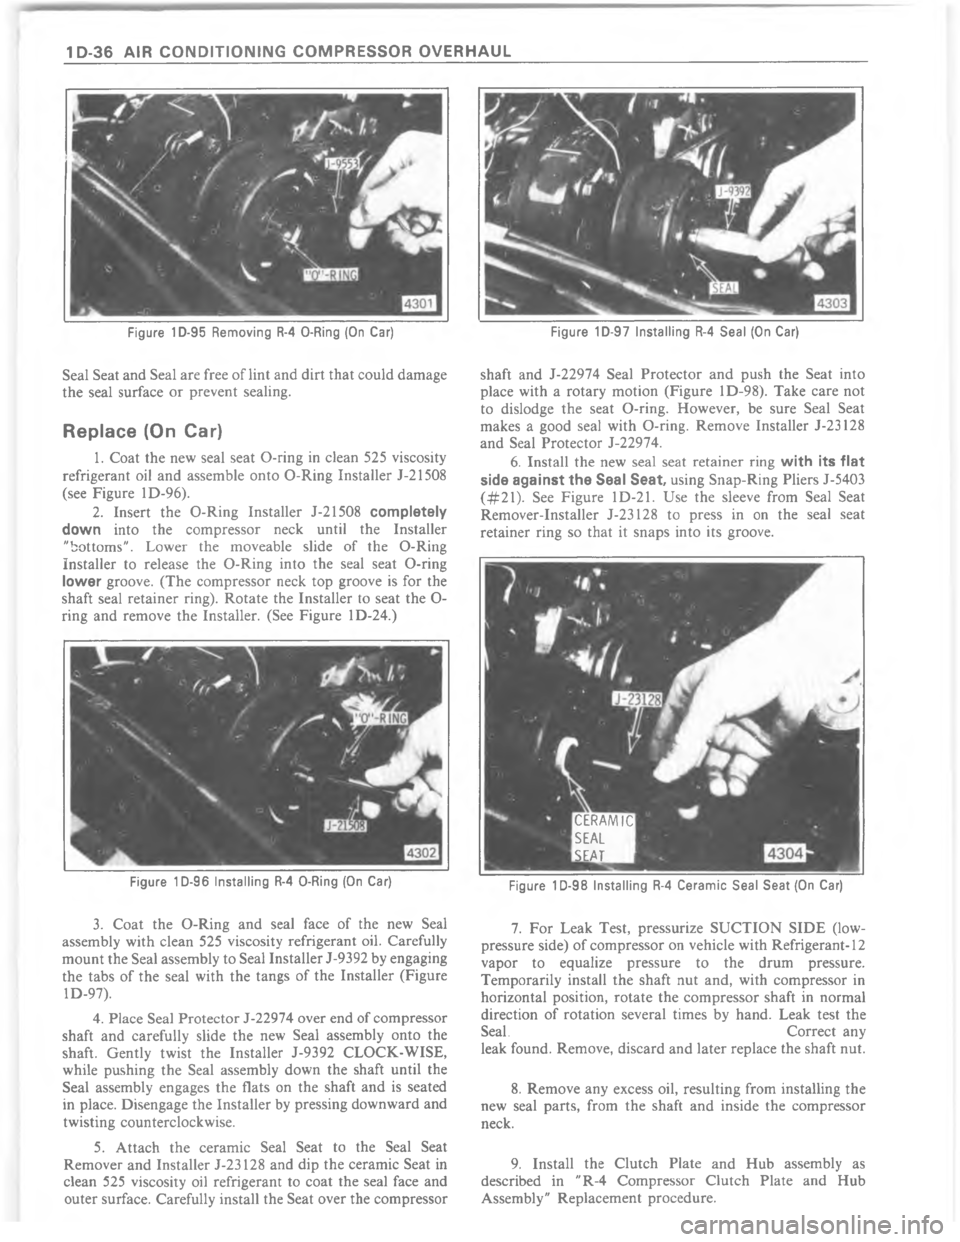 CHEVROLET LIGHT DUTY TRUCK 1980  Repair Everhaul Manual Downloaded from www.Manualslib.com manuals search engine  E  	  !$7)/- @ -&01$(7 ? $(7 ( /



8

?
7+
,	
E

*0

!\)

